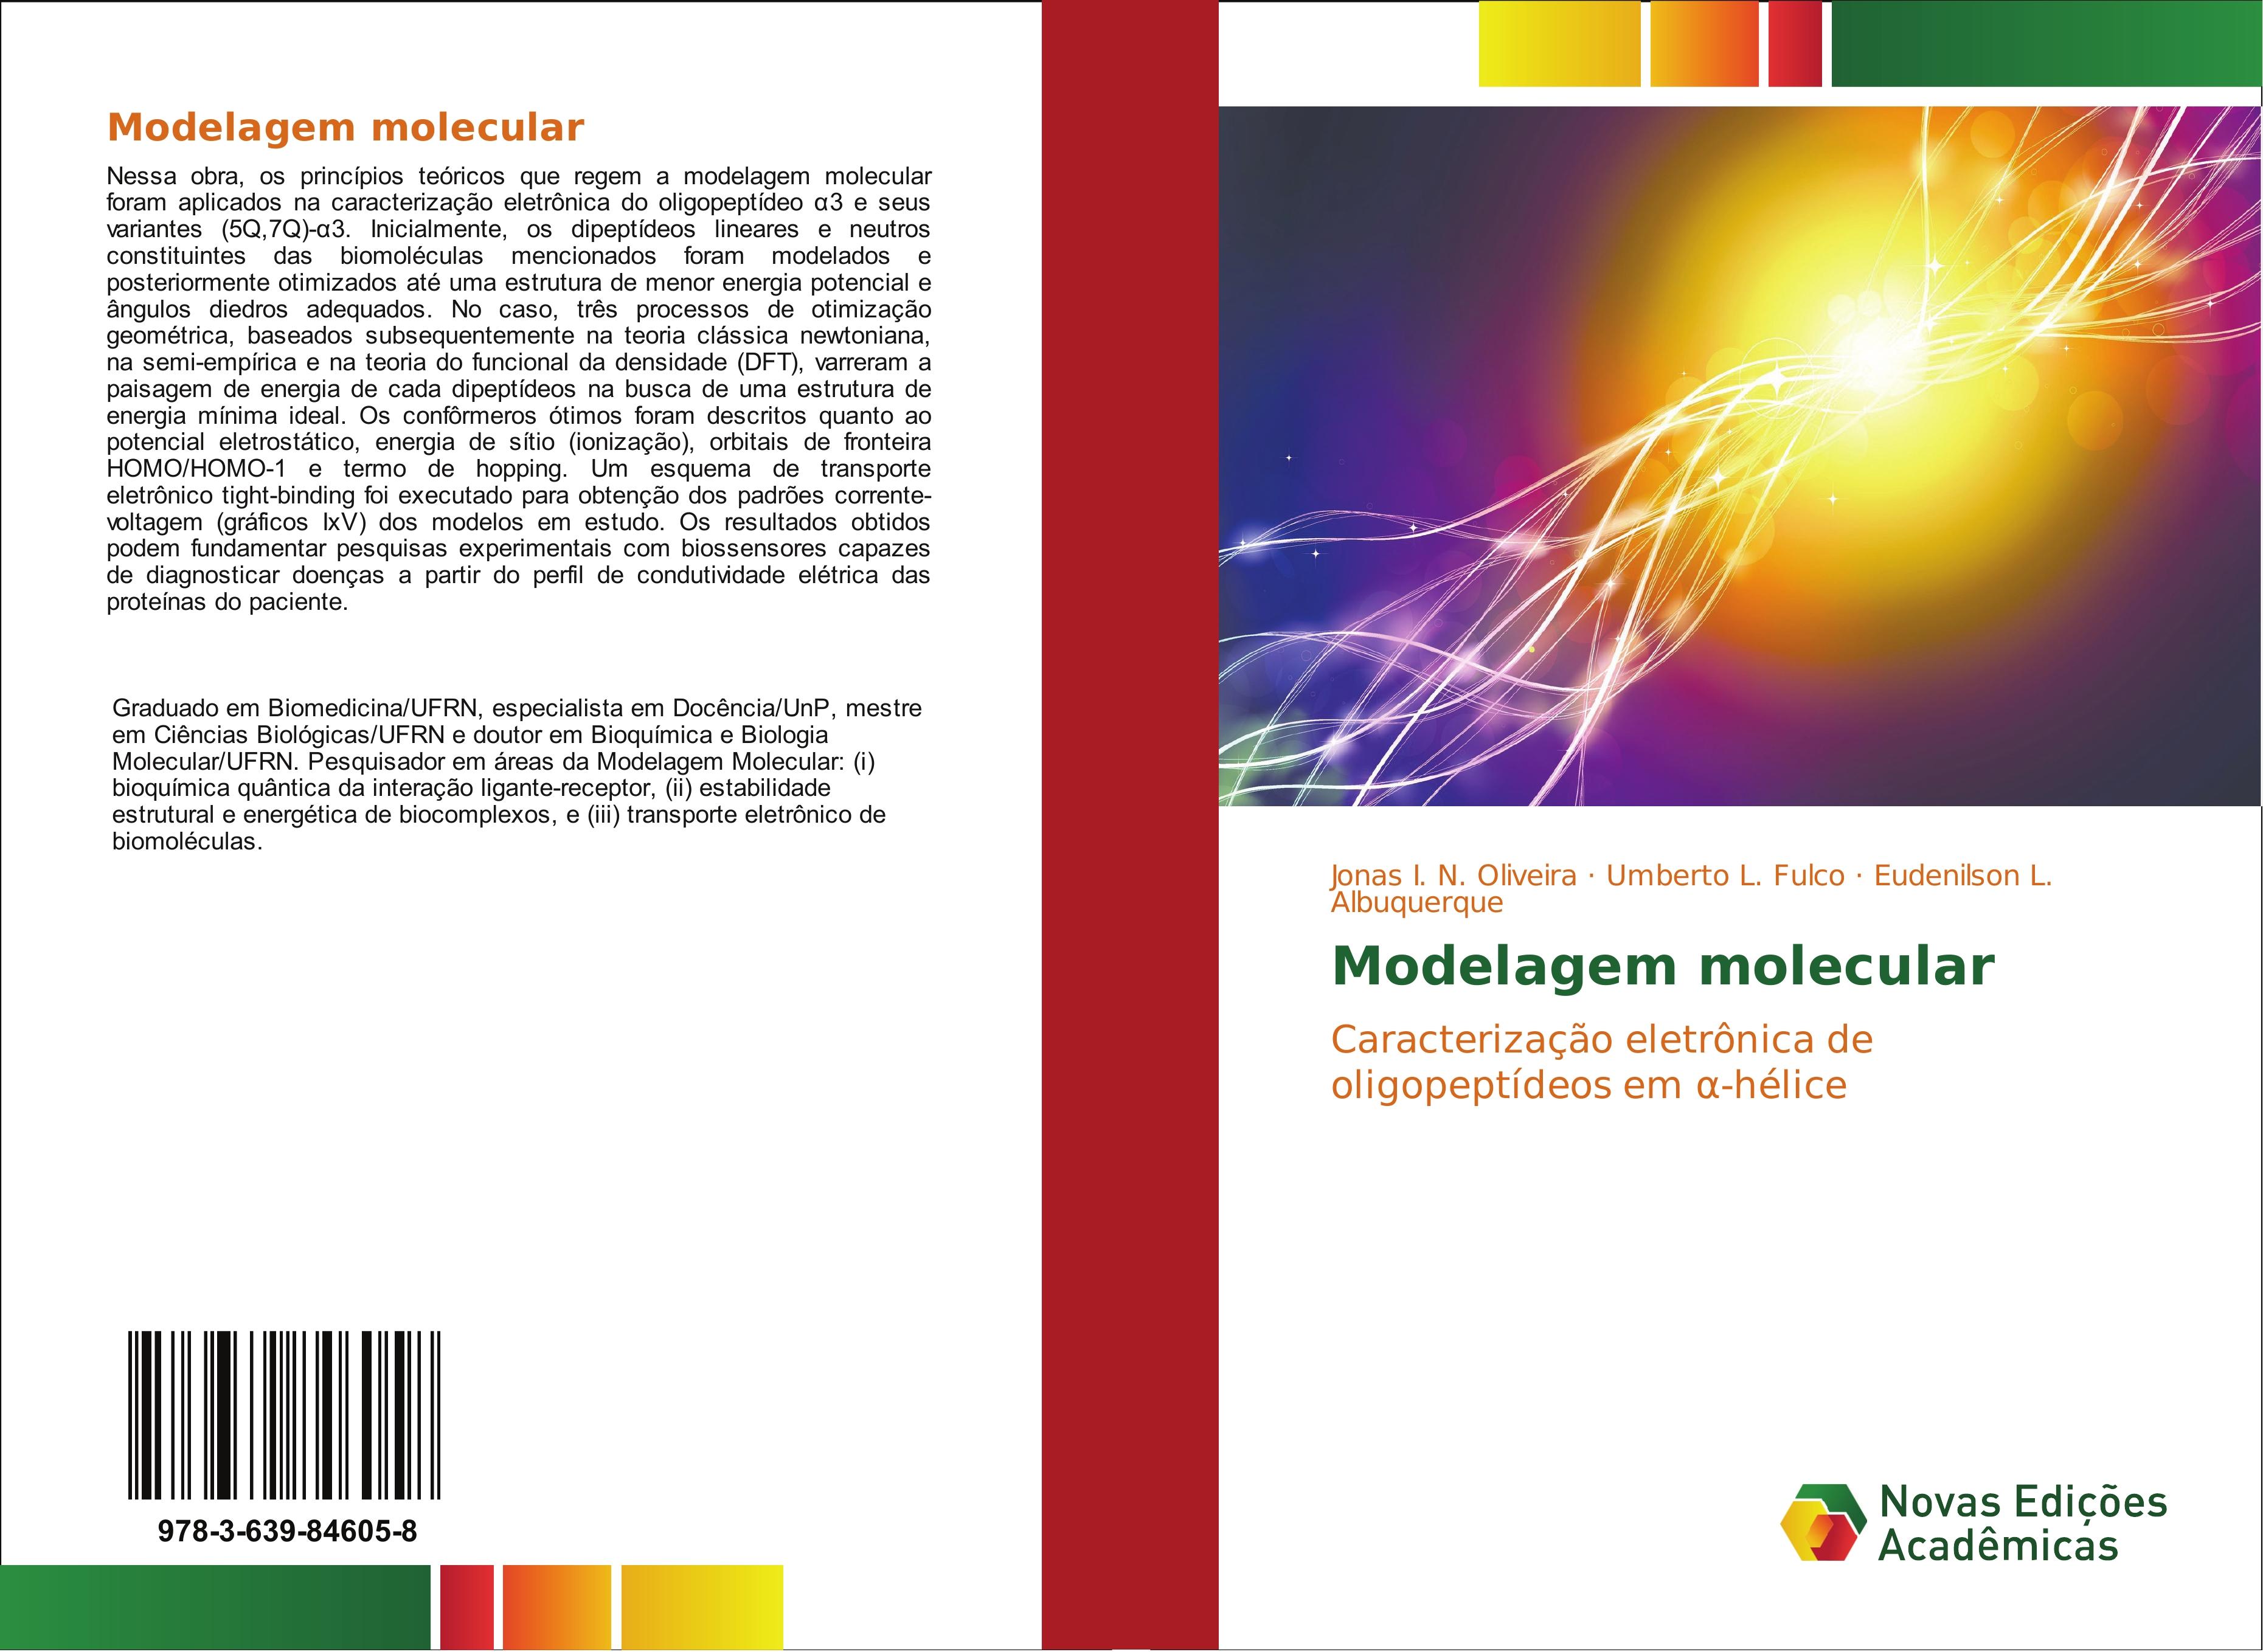 Modelagem molecular - Jonas I. N. Oliveira Umberto L. Fulco Eudenilson L. Albuquerque